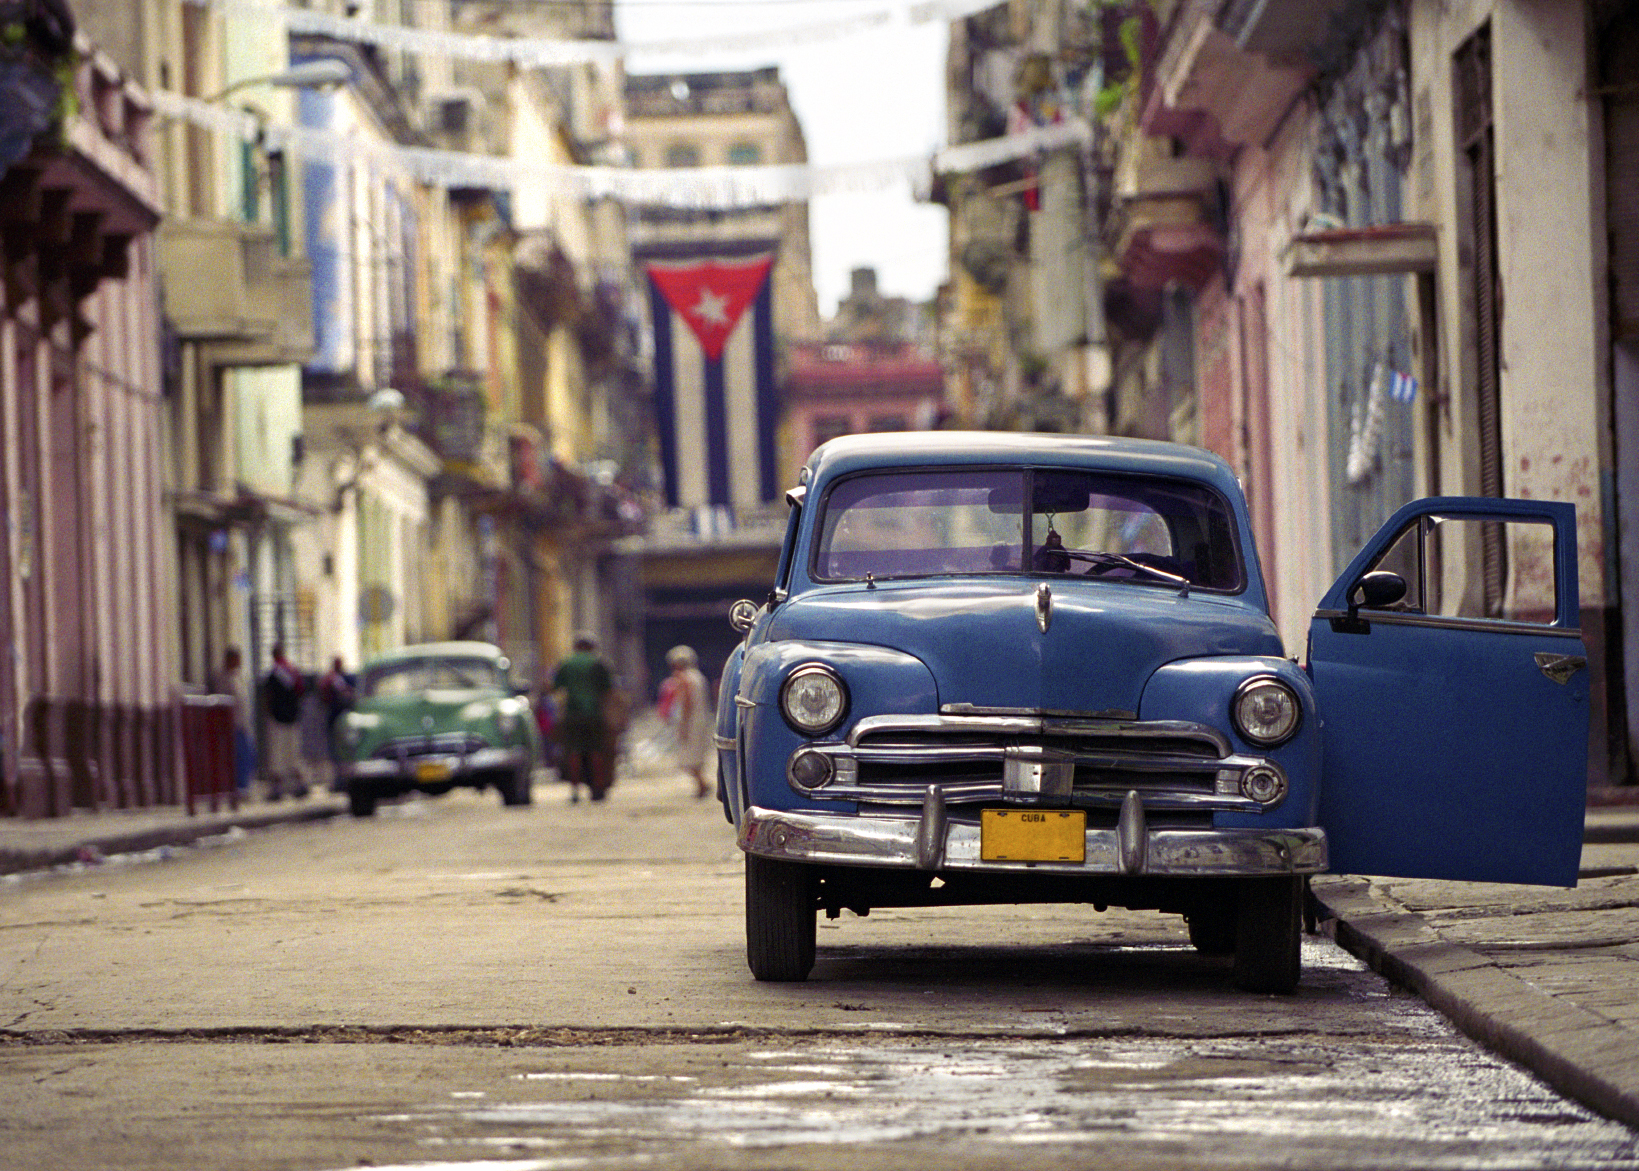 Old American Car in Cuba